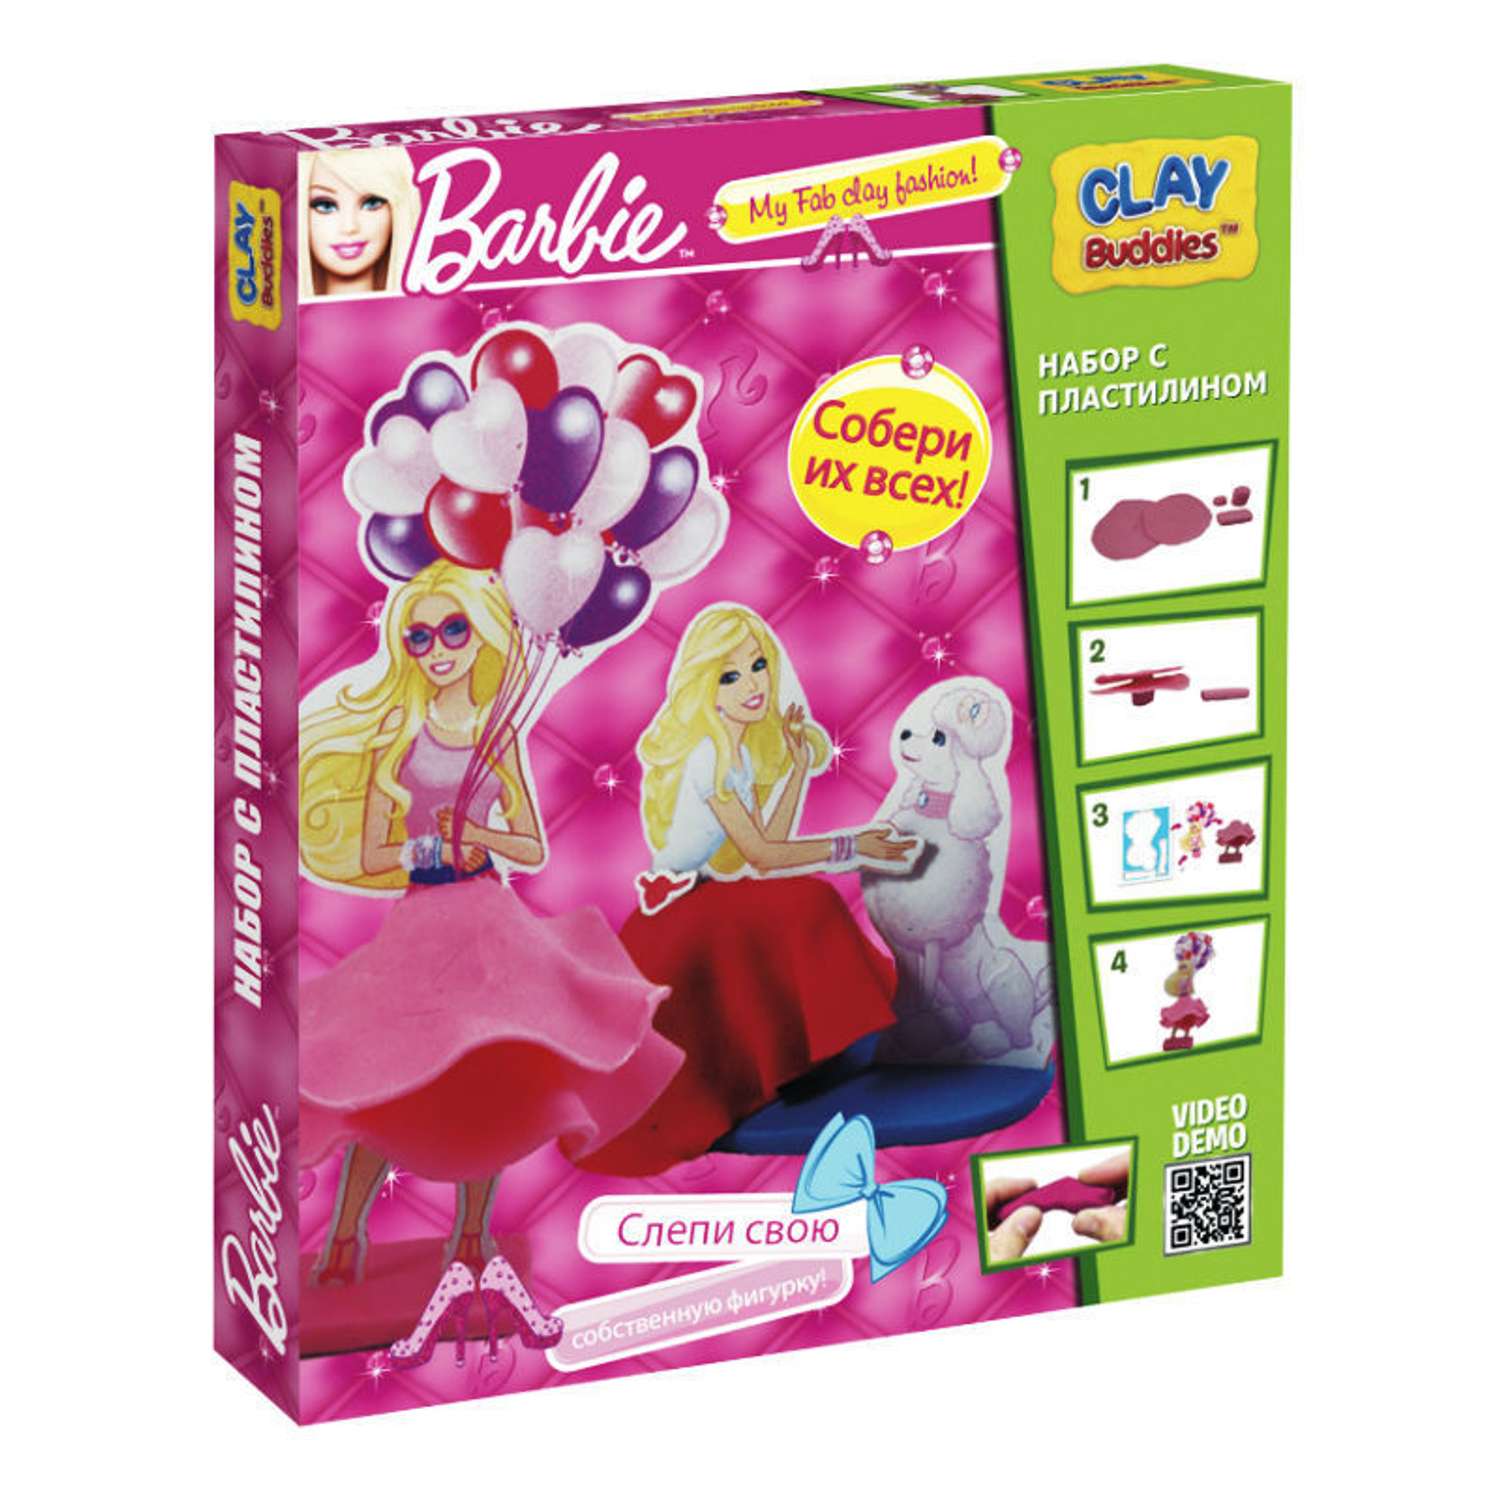 Набор для лепки Clay Buddies Barbie - фото 1